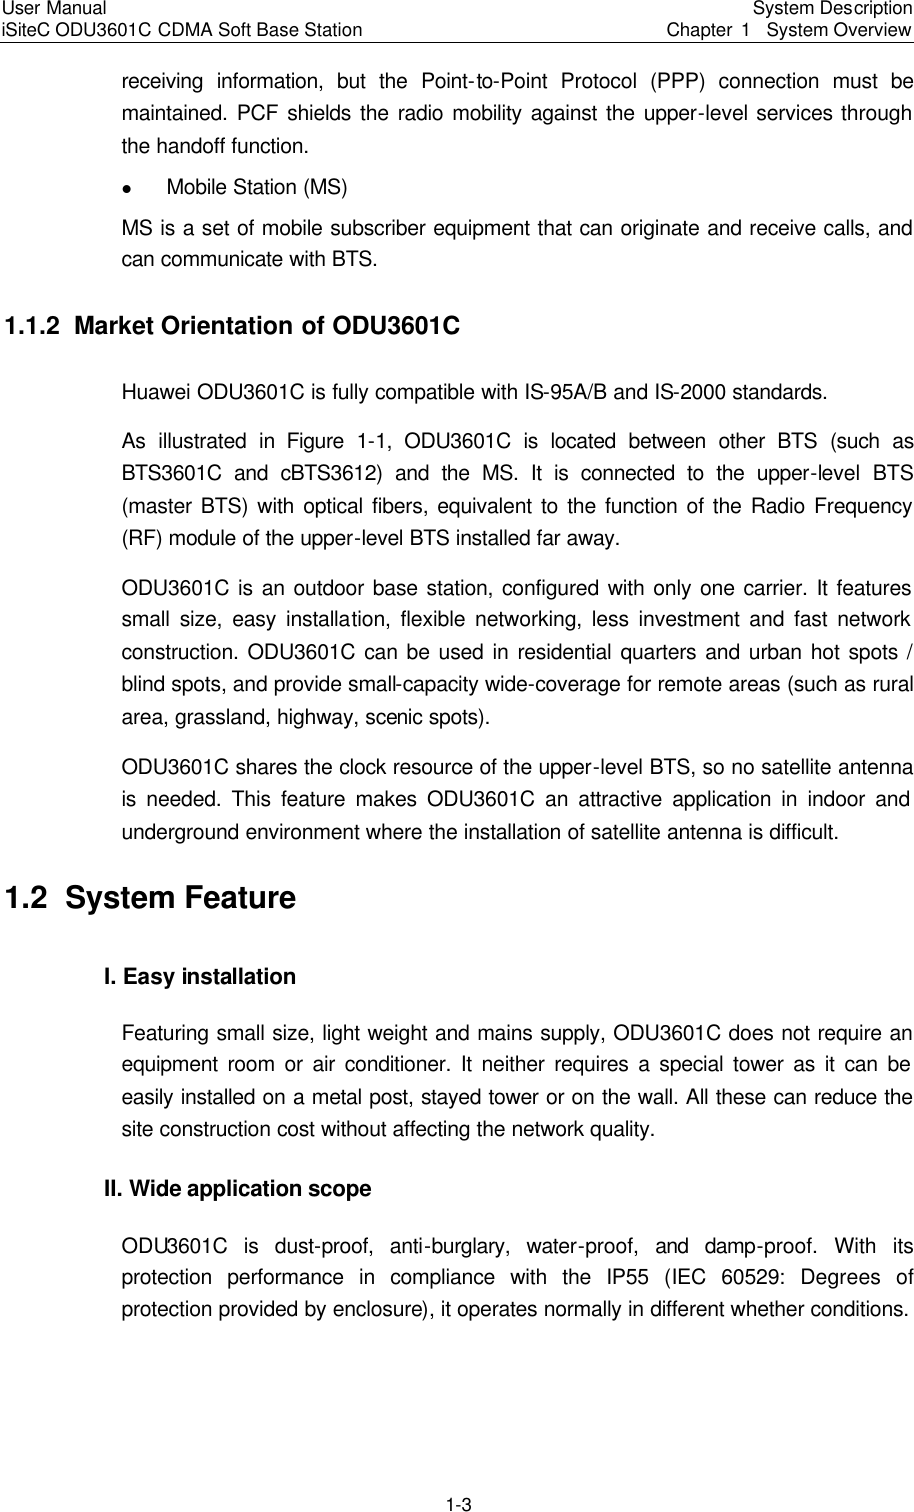 Page 6 of Huawei Technologies ODU3601C-800 CDMA Base Station User Manual 2